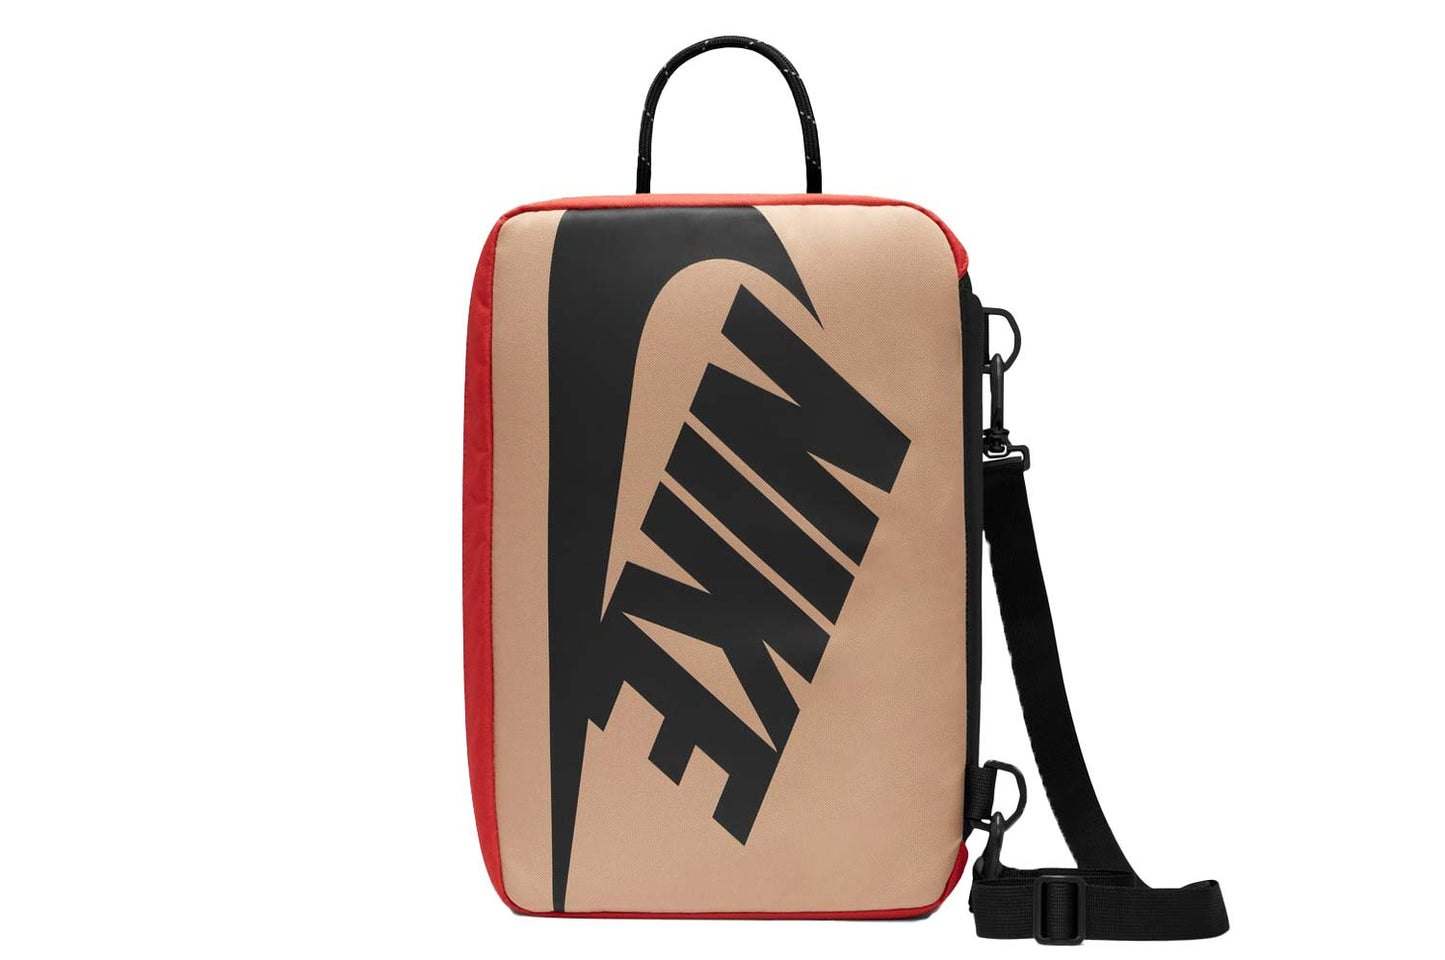 Shoebox Bag (12L)